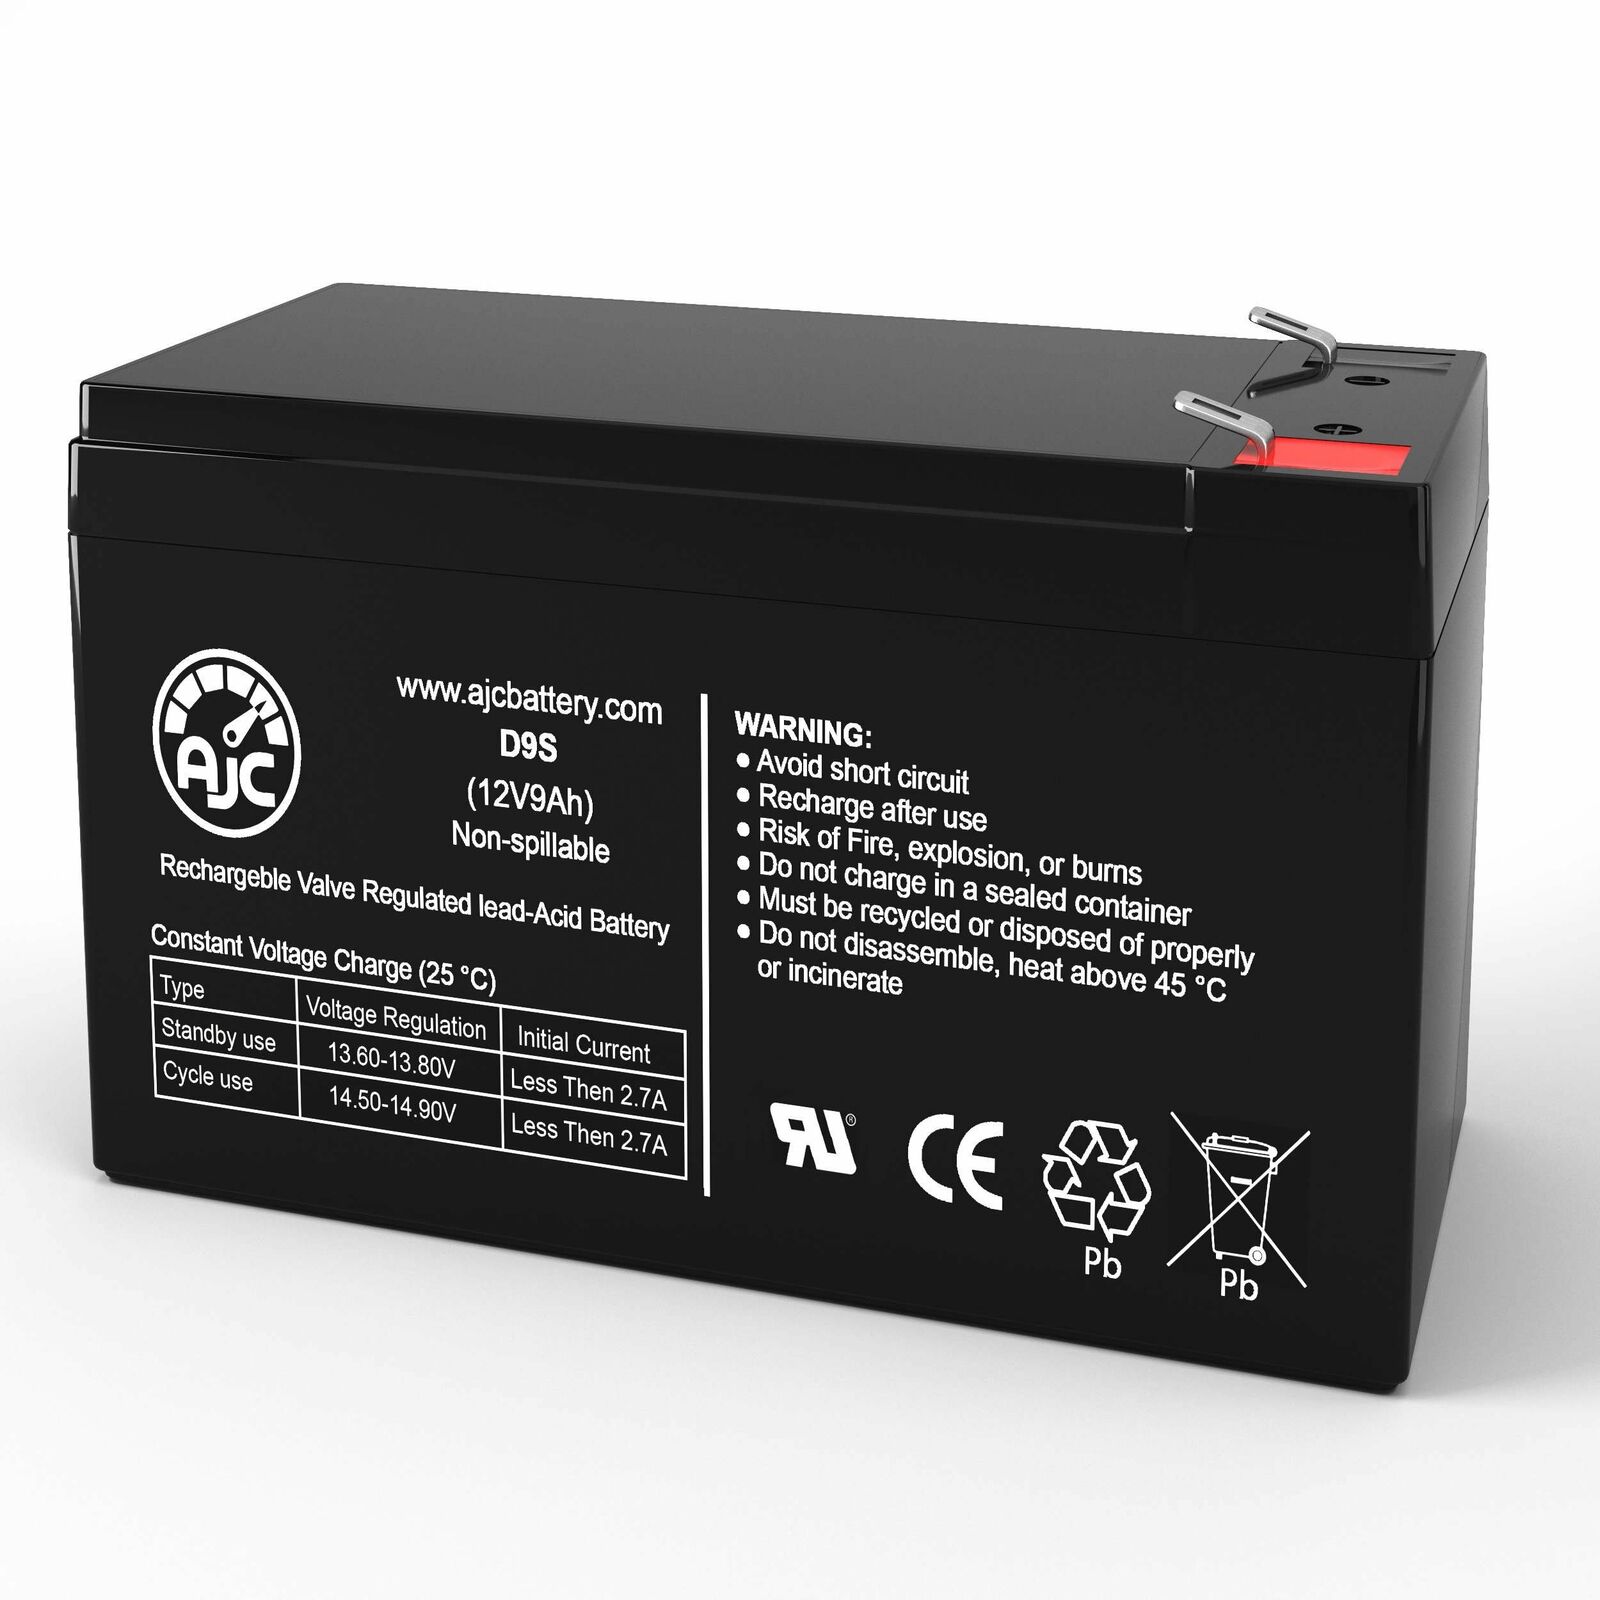 APC Back-UPS NS 8 Outlet 600VA 120V (BN600R) 12V 9Ah UPS Replacement Battery